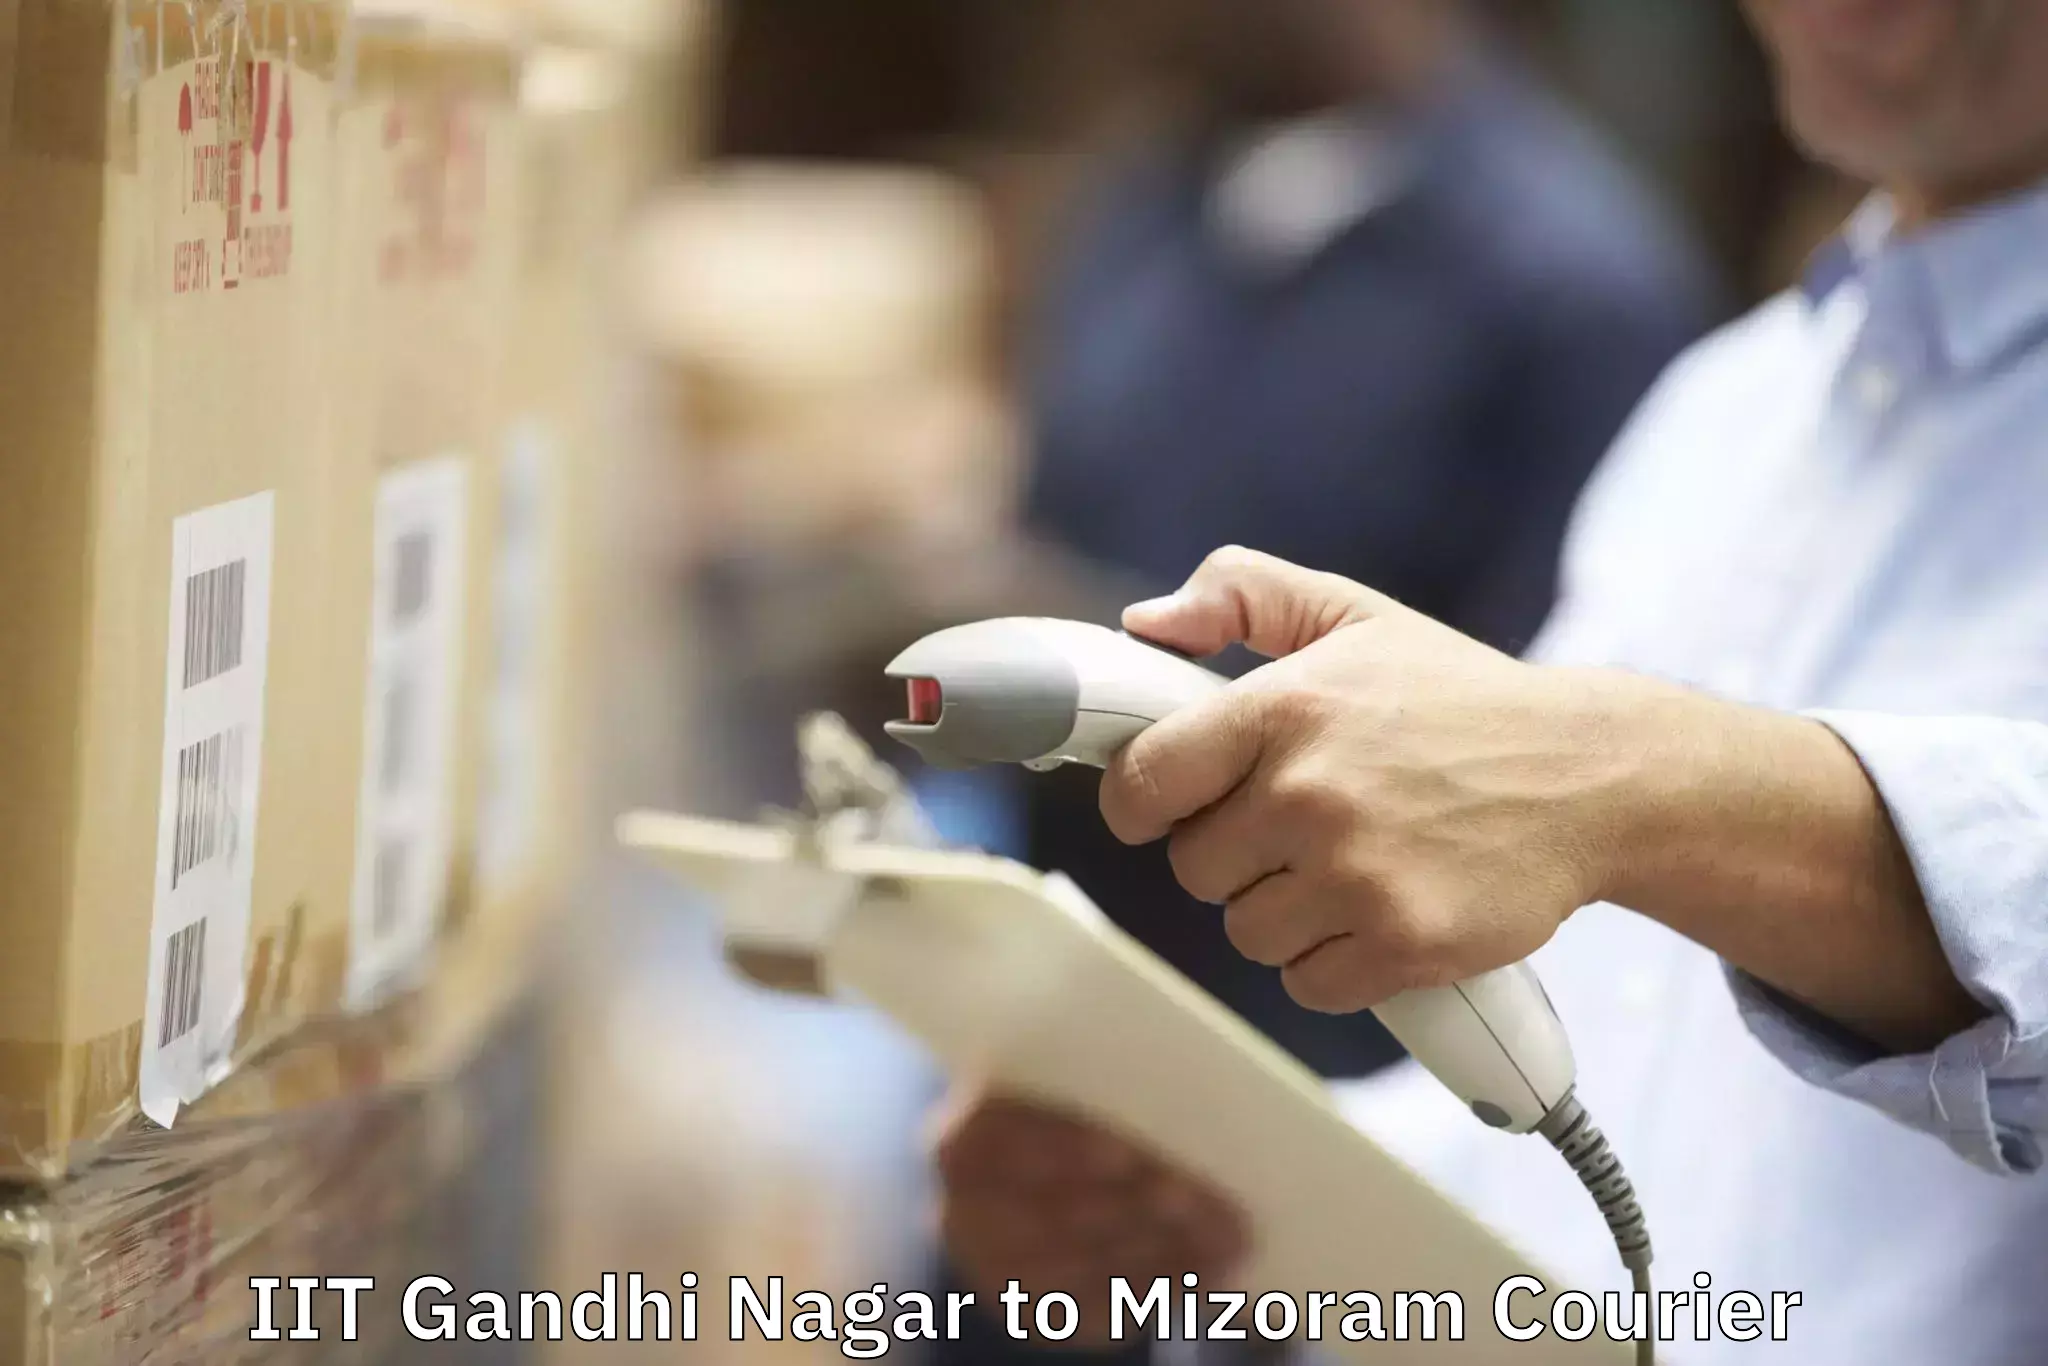 Efficient moving company IIT Gandhi Nagar to Mizoram